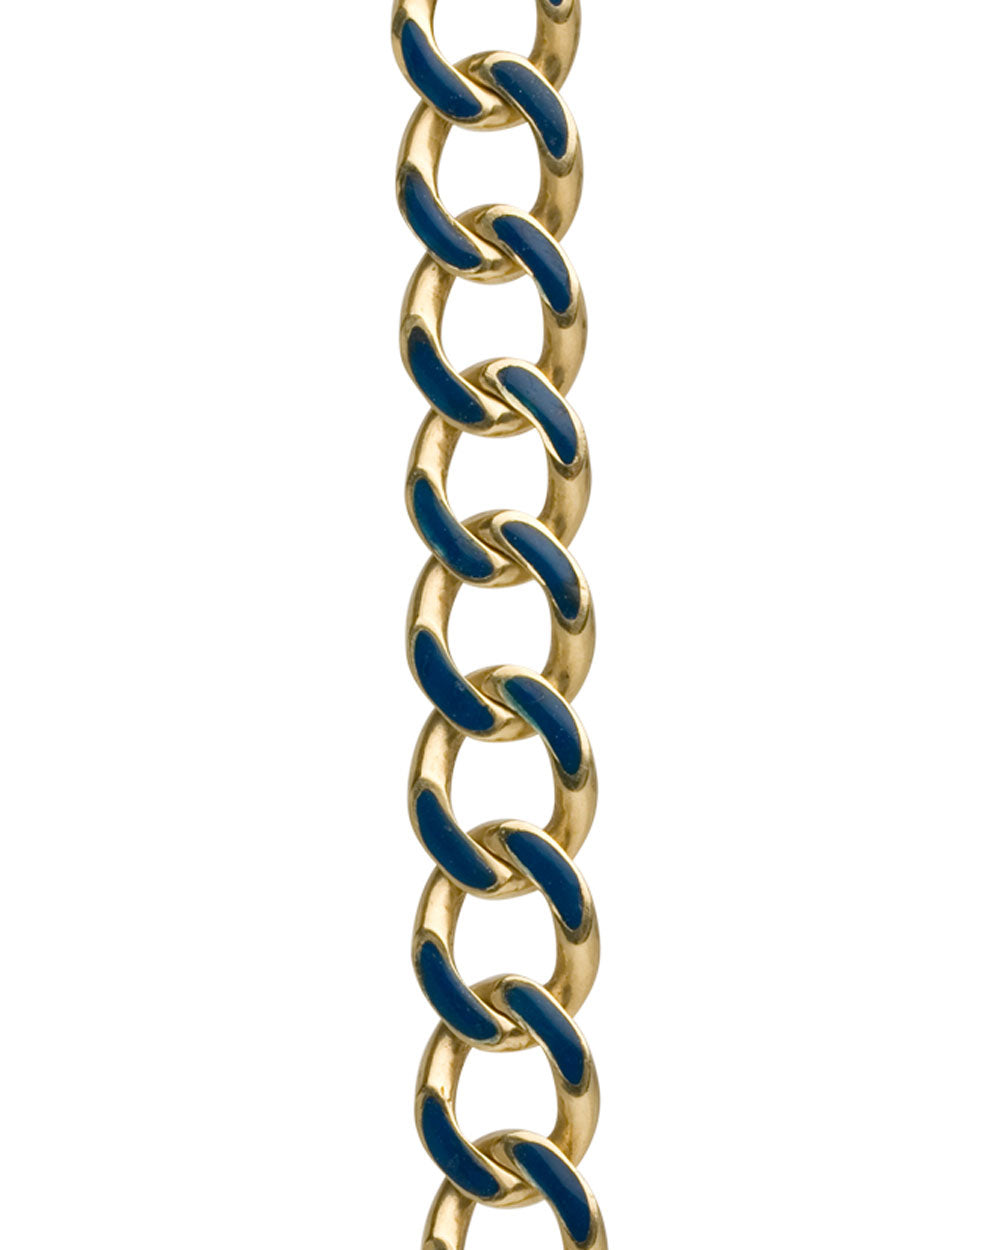 Yellow Gold and Blue Enamel Link Bracelet